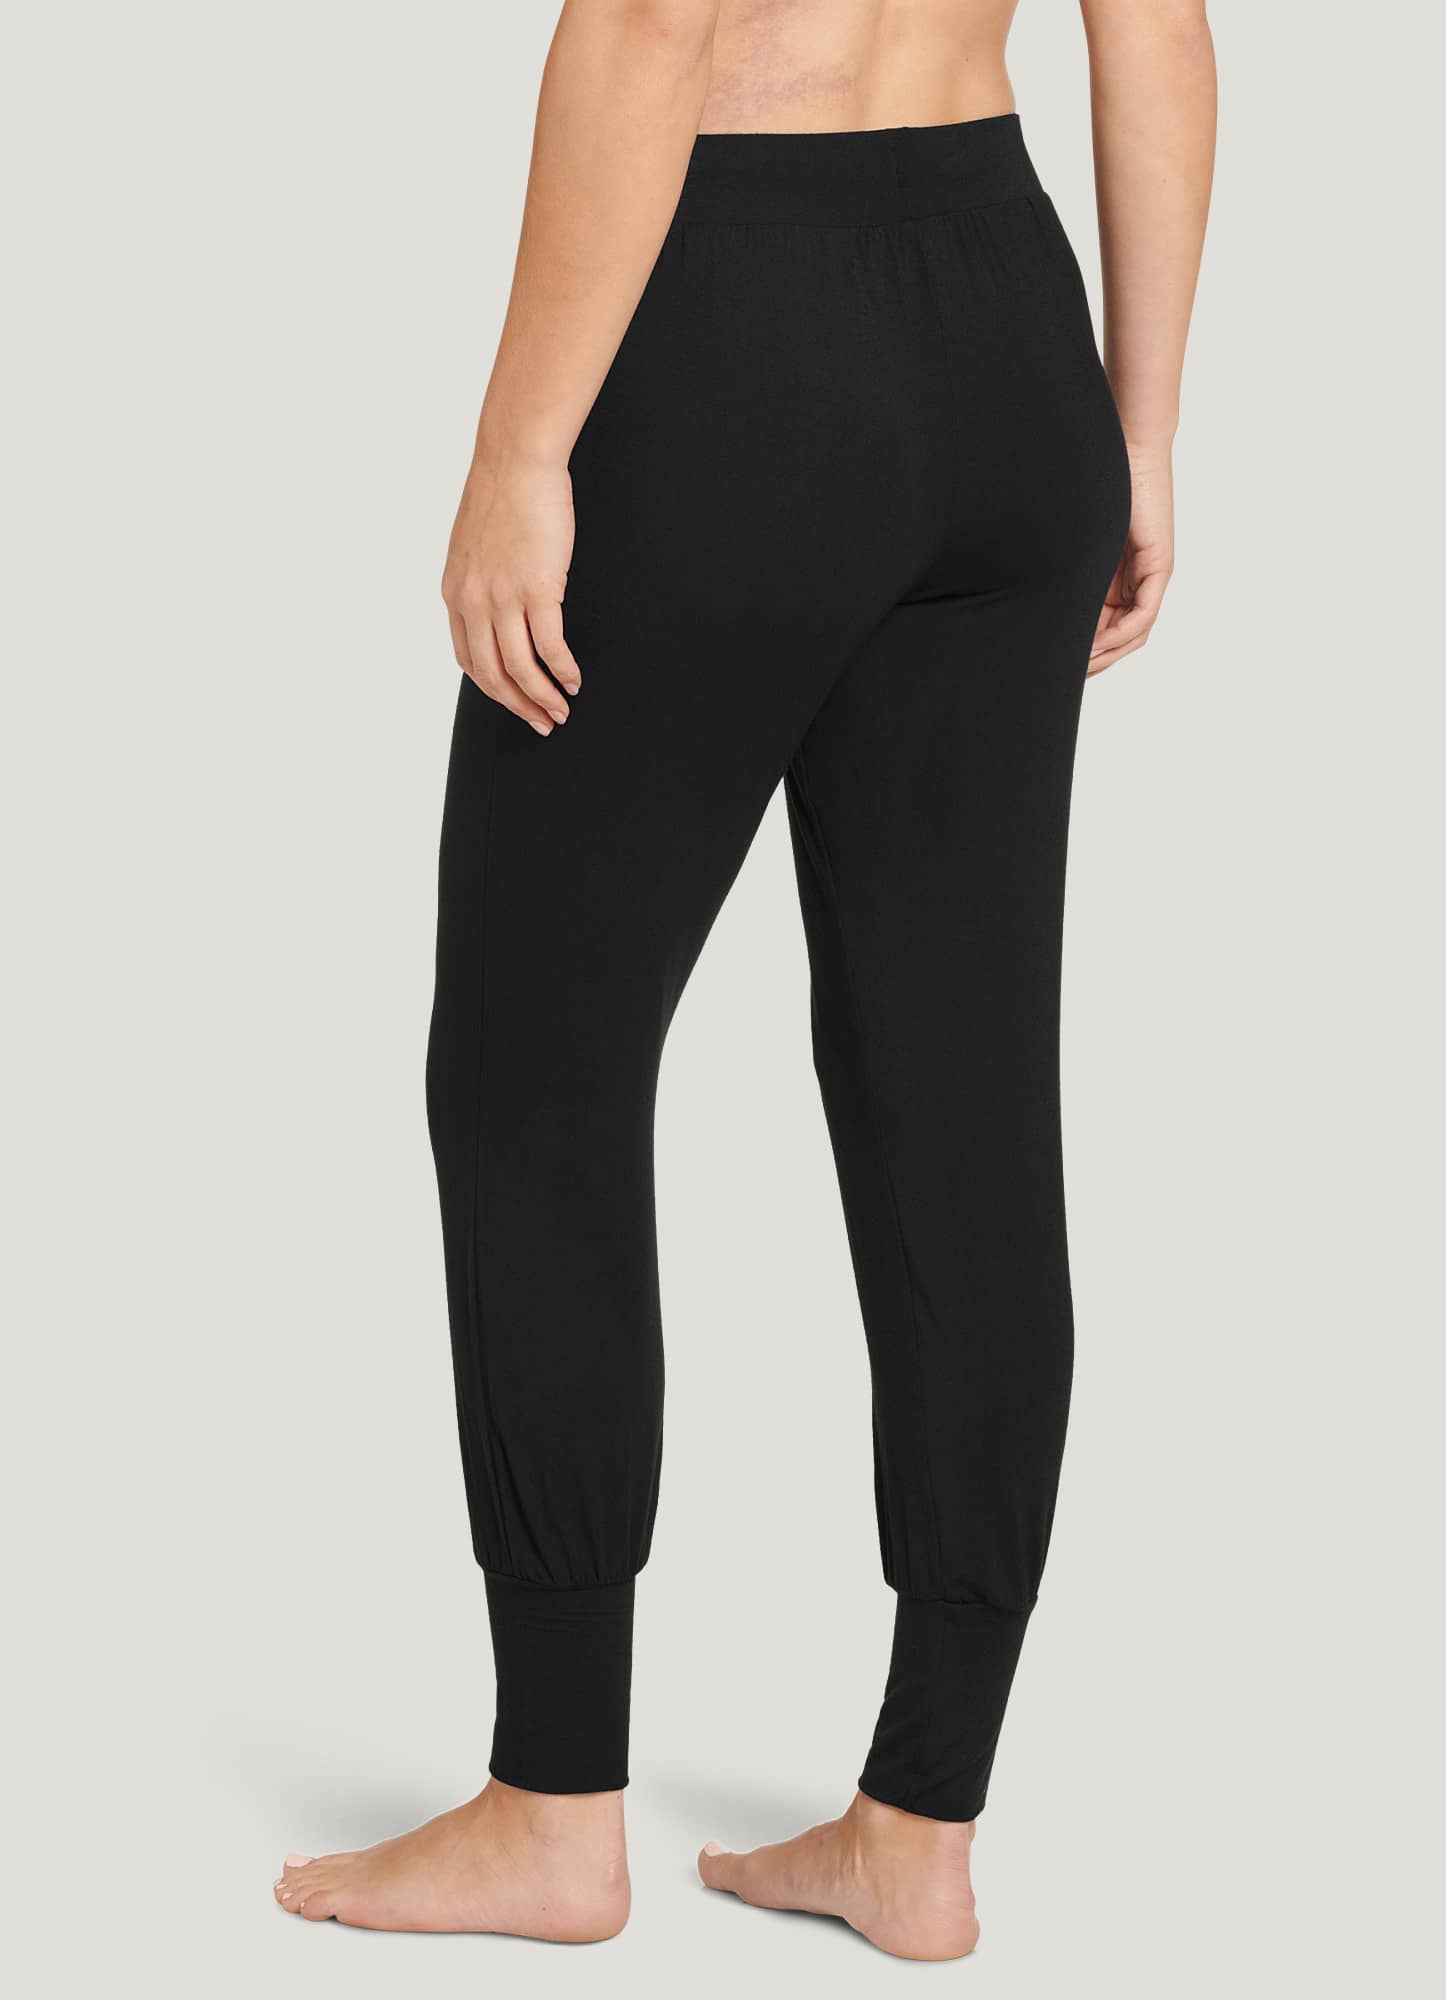 Yoga Pants for Women Cotton Soft Modal Sweatpants with Pockets